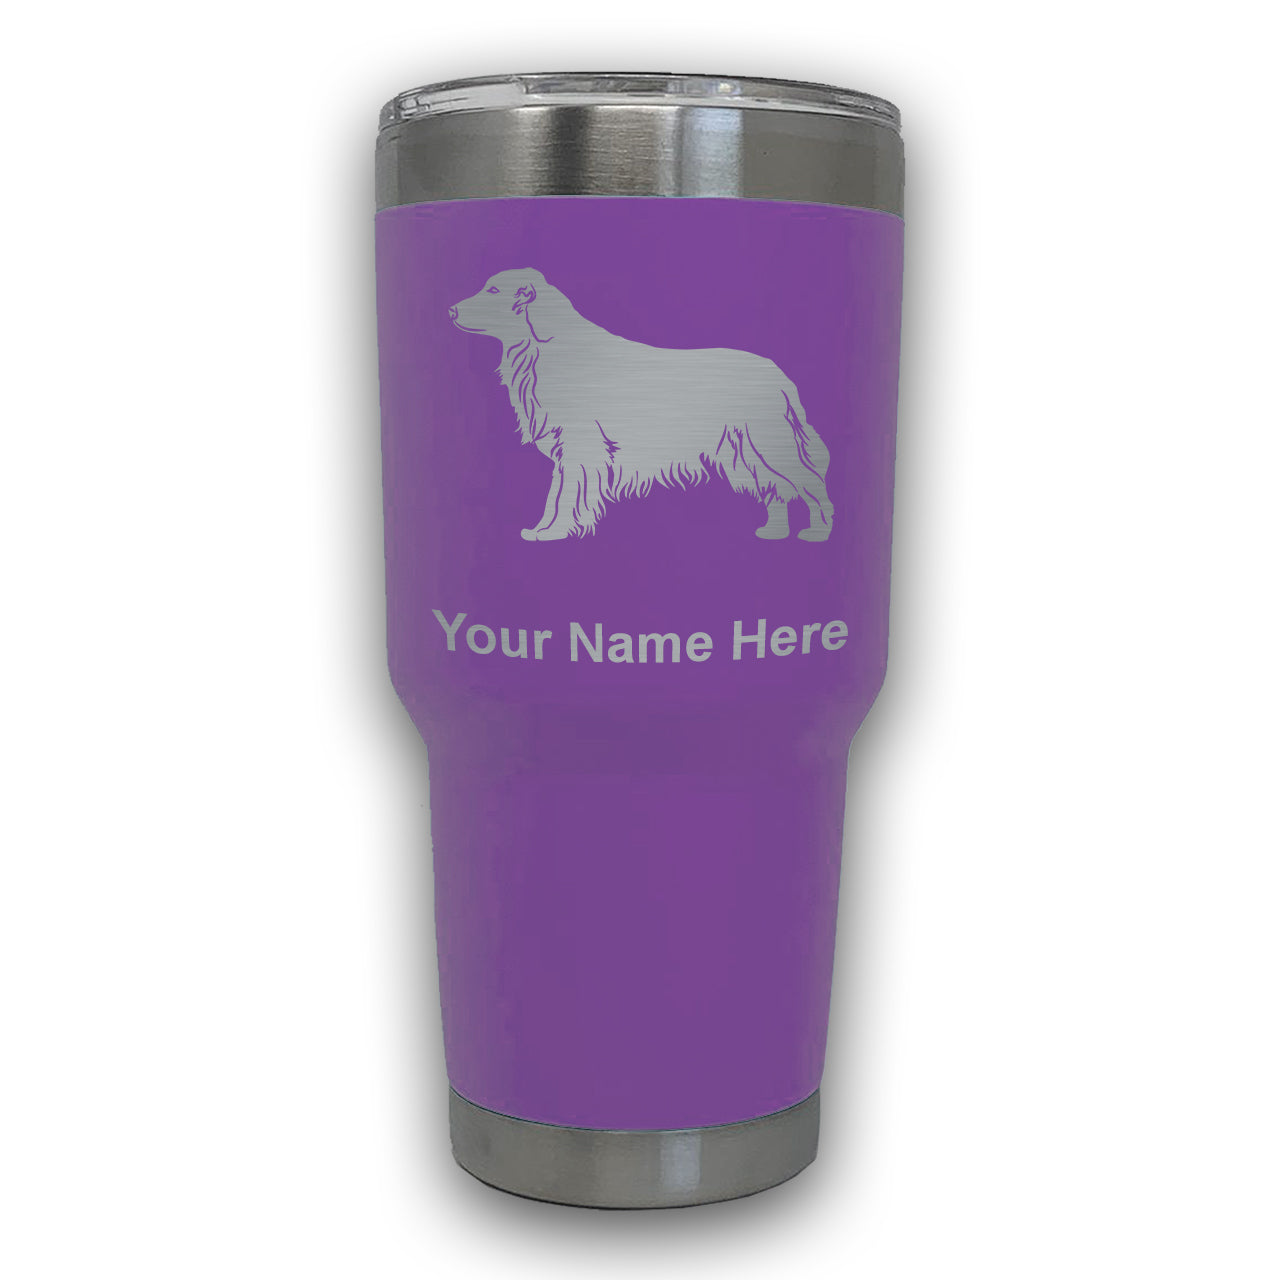 LaserGram 30oz Tumbler Mug, Golden Retriever Dog, Personalized Engraving Included